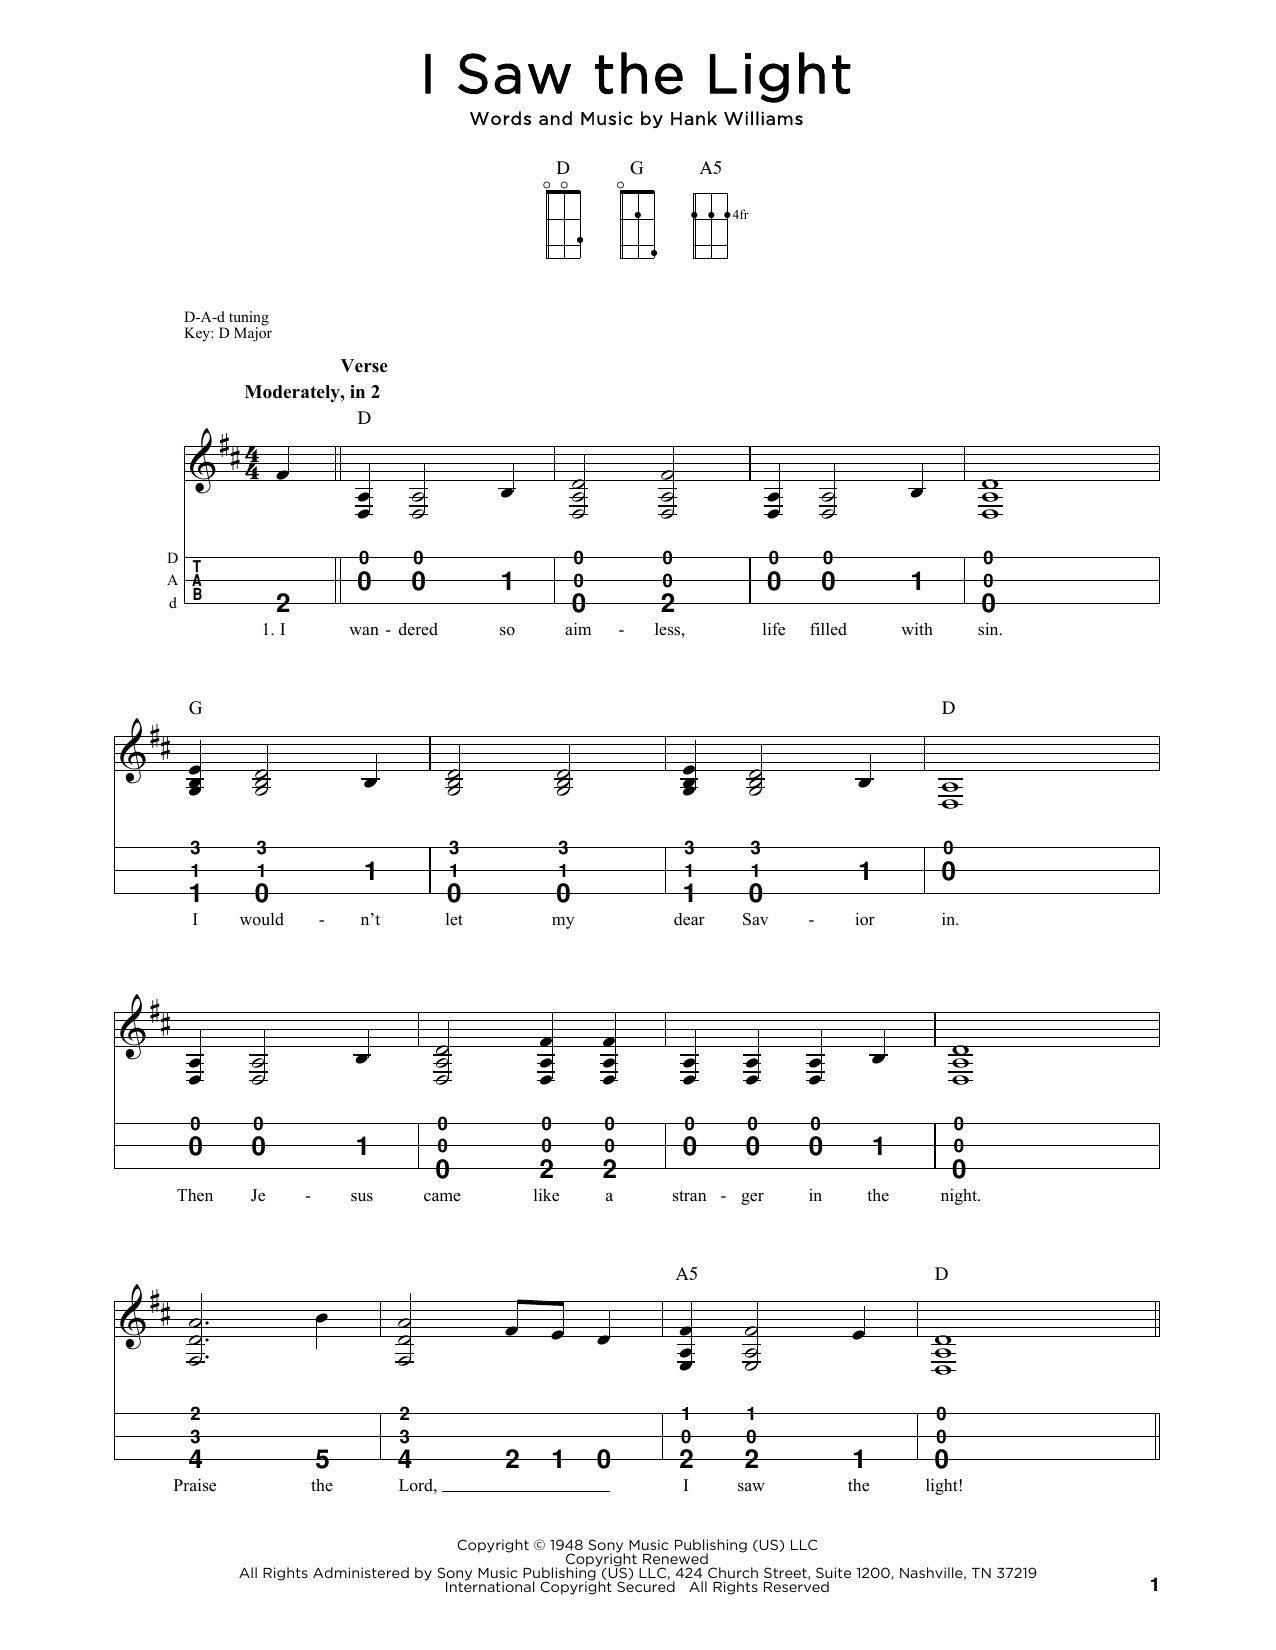 Hank Williams I Saw The Light (arr. Steven B. Eulberg) Sheet Music Notes & Chords for Dulcimer - Download or Print PDF